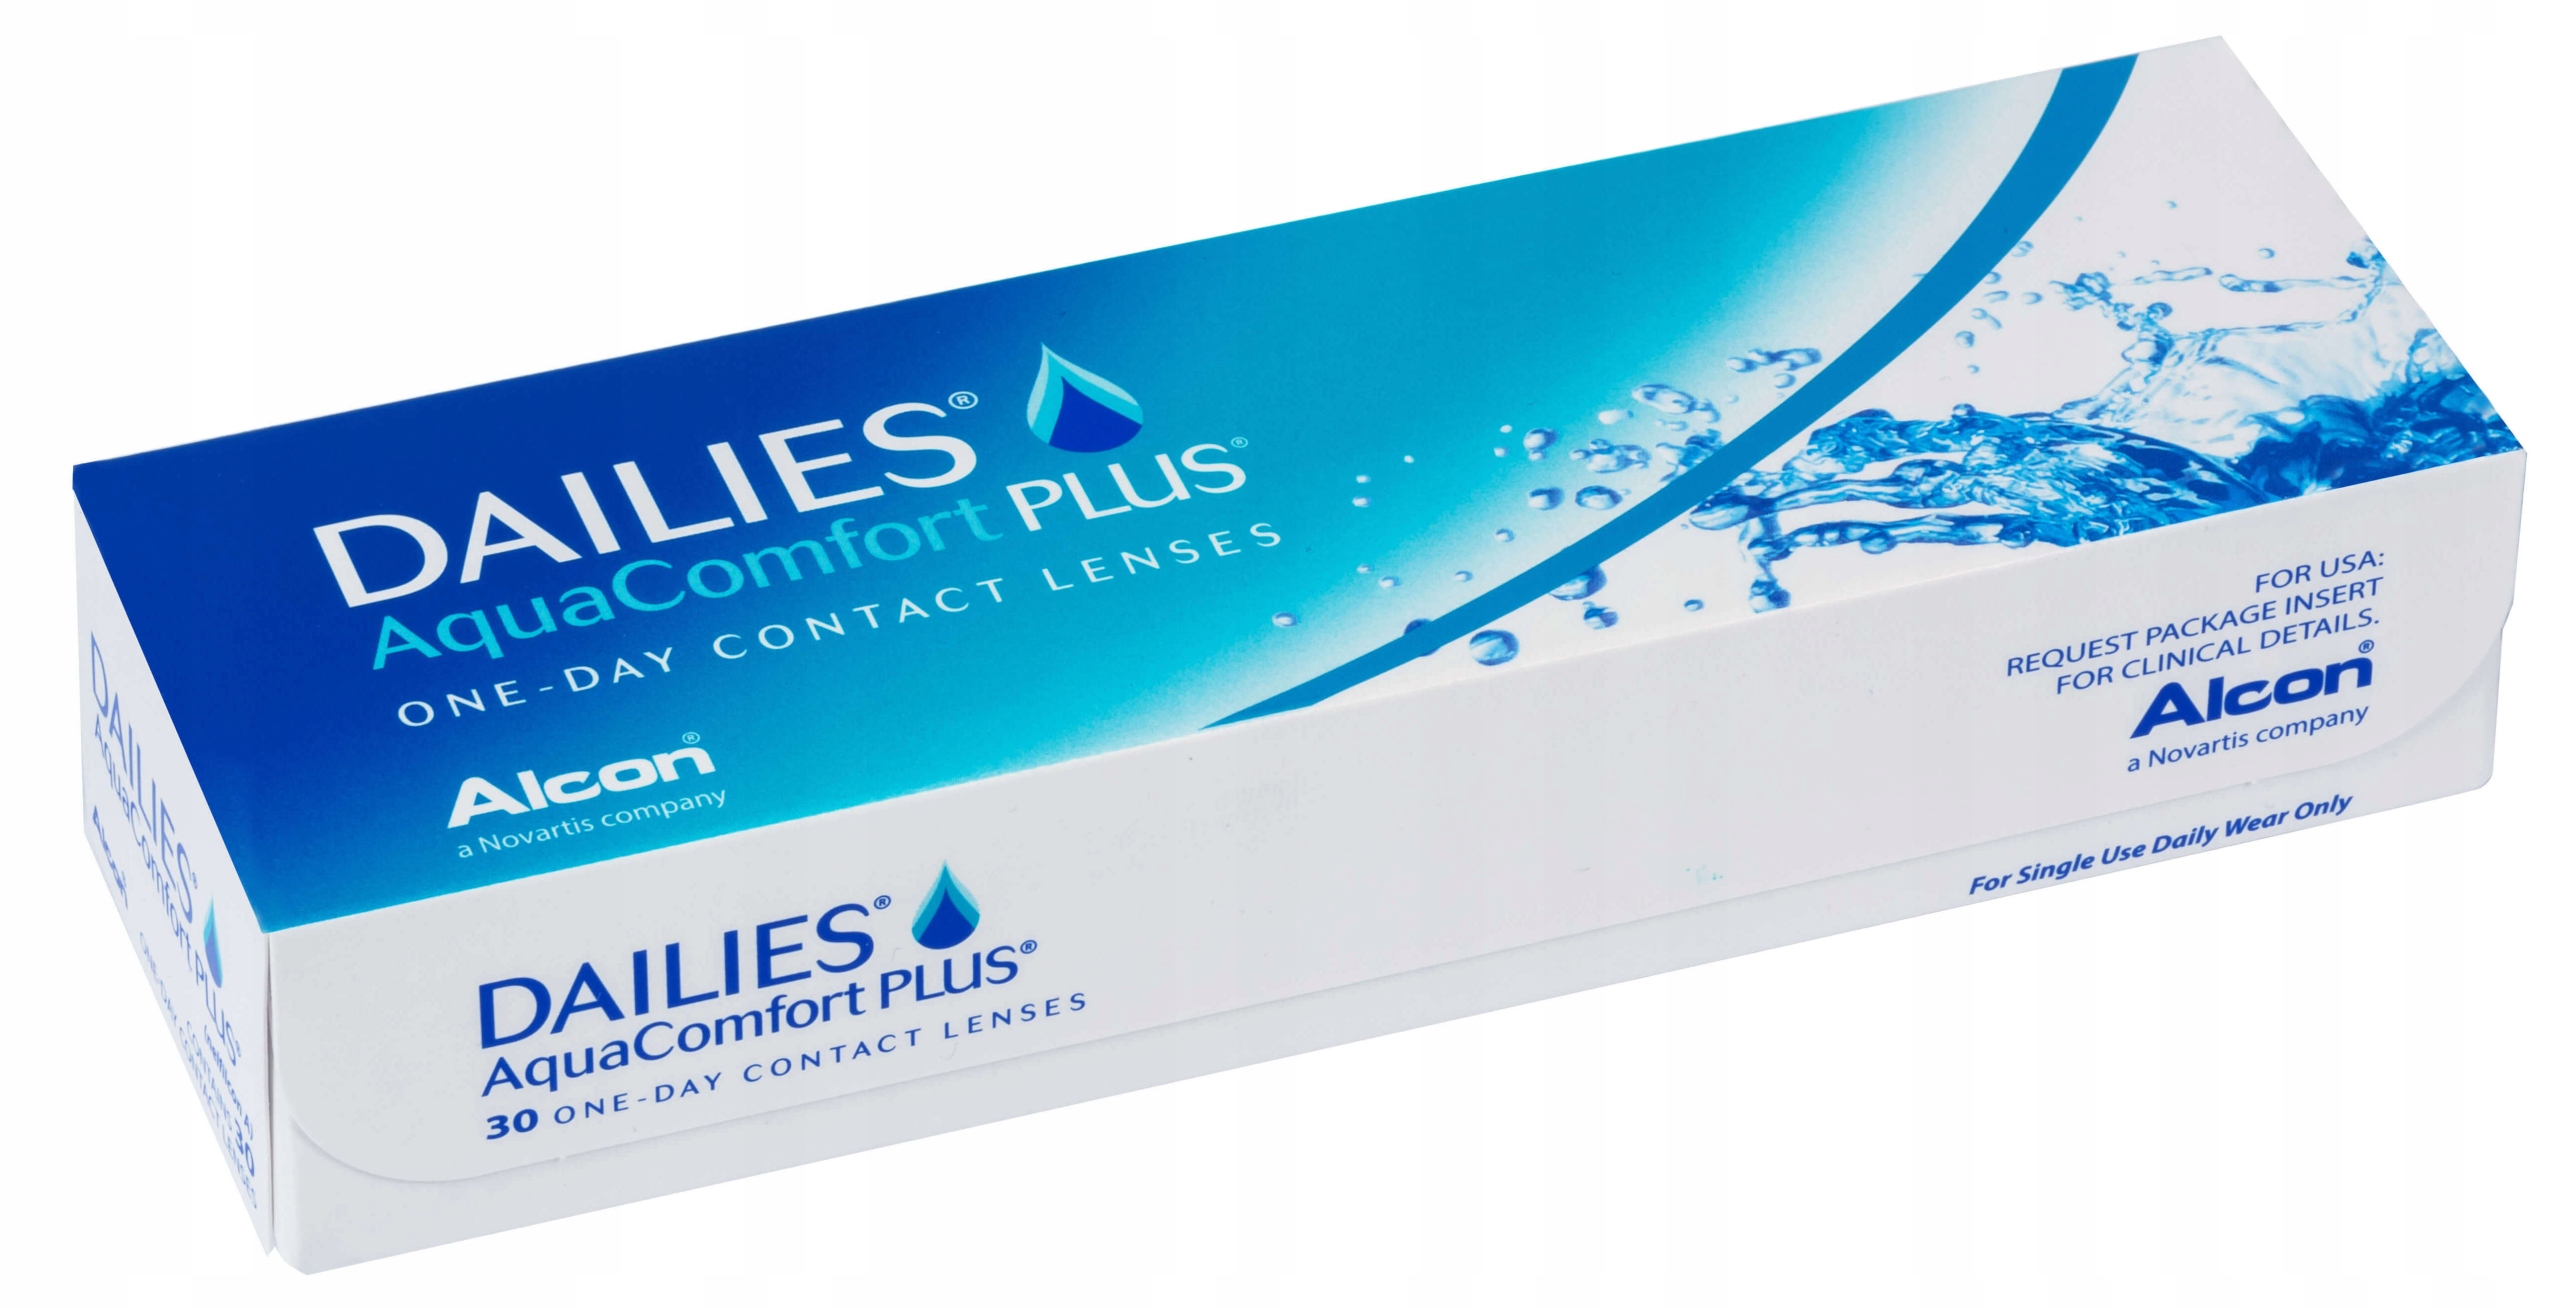 dailies-aquacomfort-plus-multifocal-90-pk-contacts-online-reviews